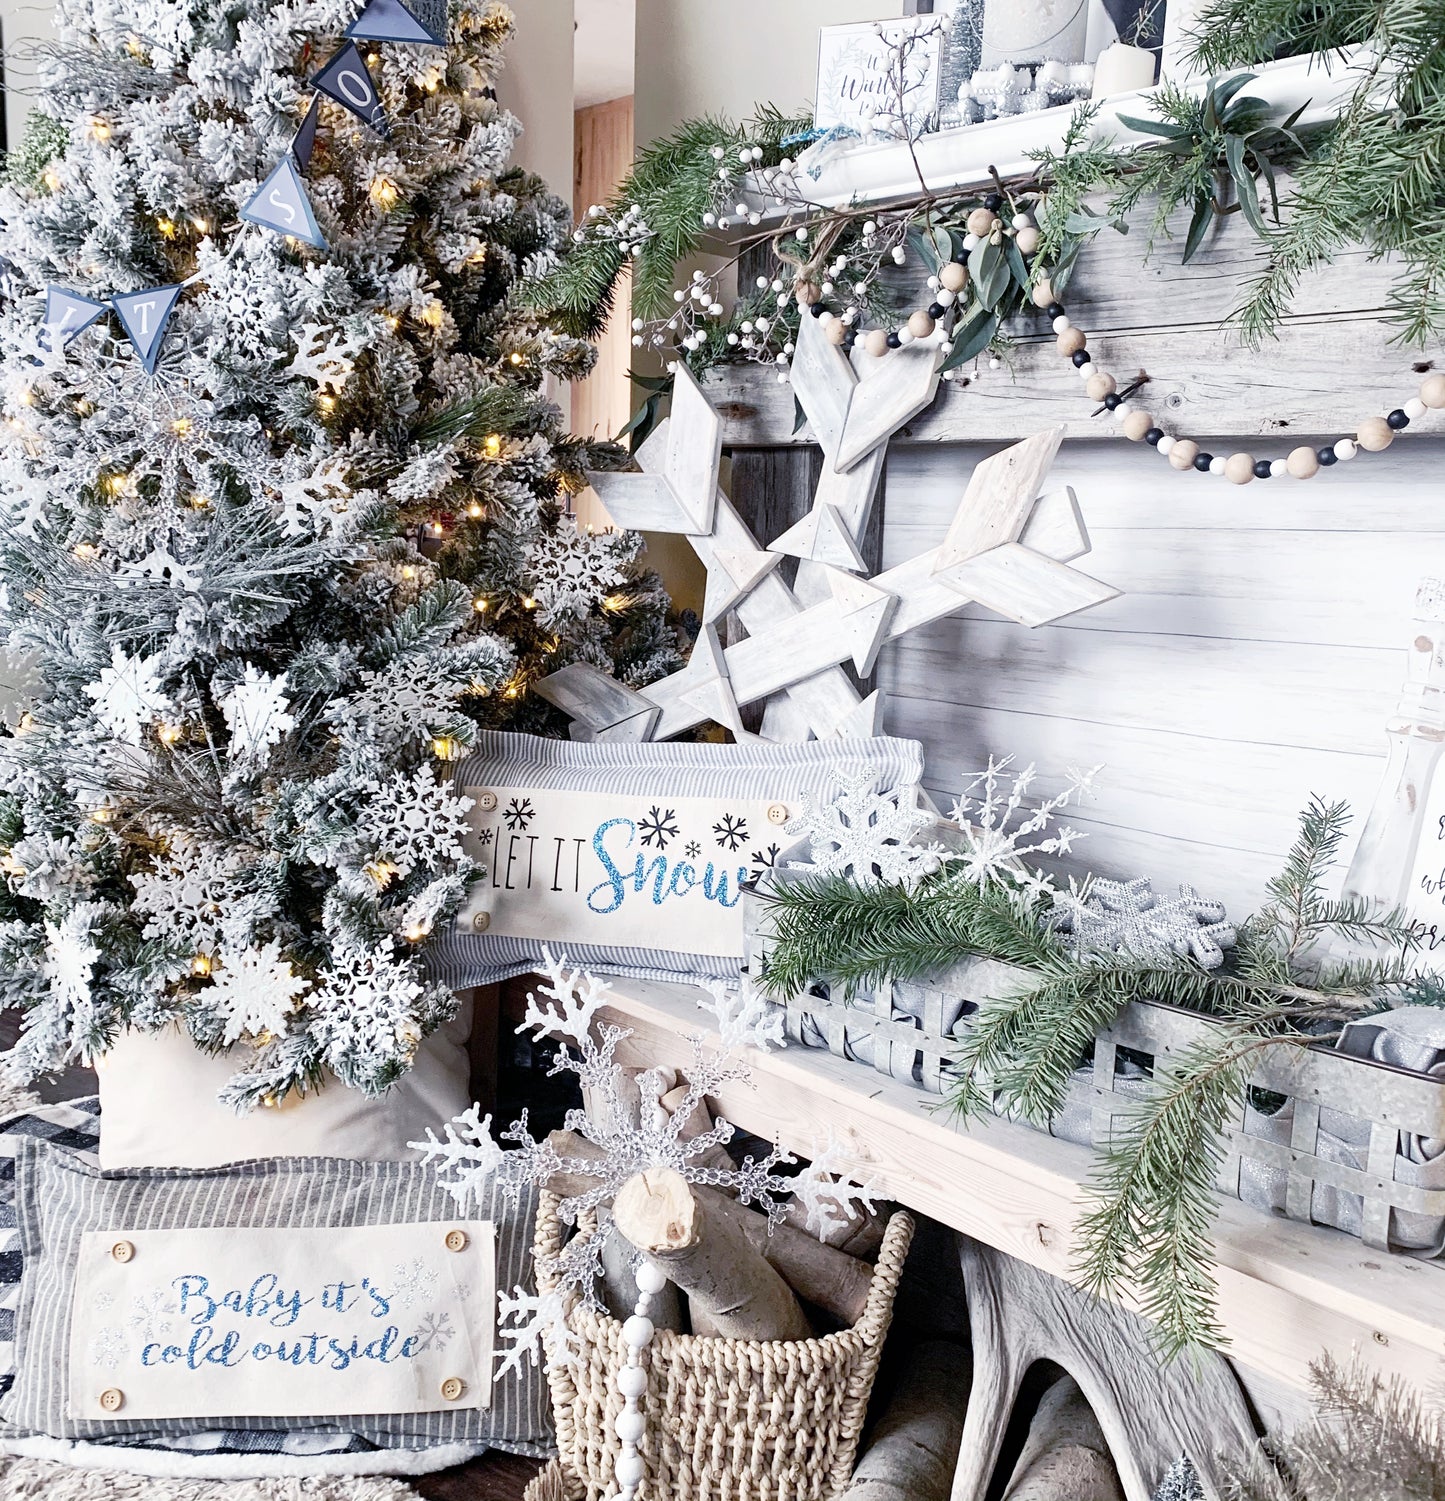 Glitter Seasonal Panel: Winter Blue Ice Sparkle Twinkle Bling Glitz Confetti Christmas; LET IT SNOW